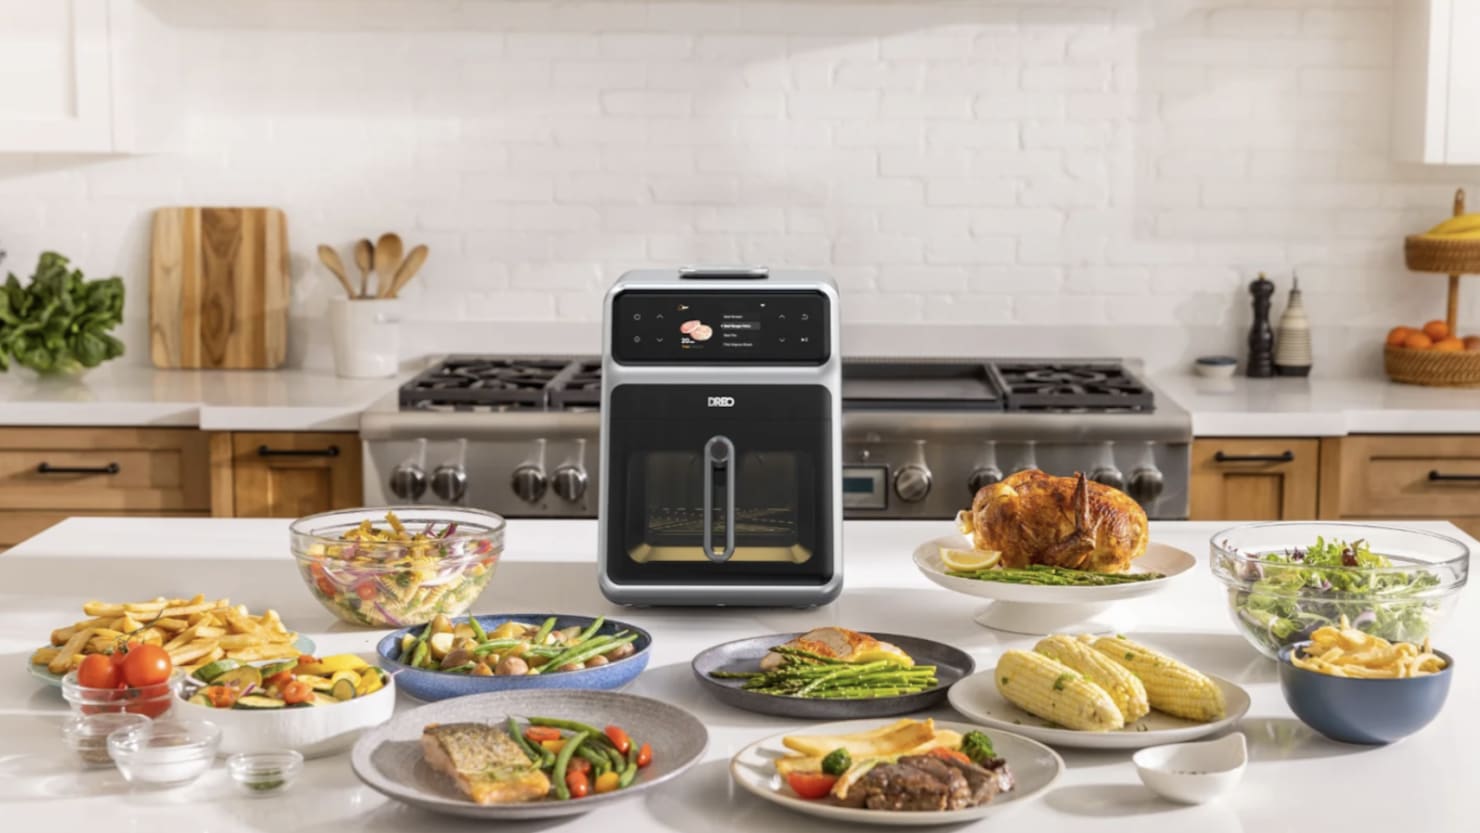 Dreo ChefMaker Combi Fryer Review: Smart appliance with speedy